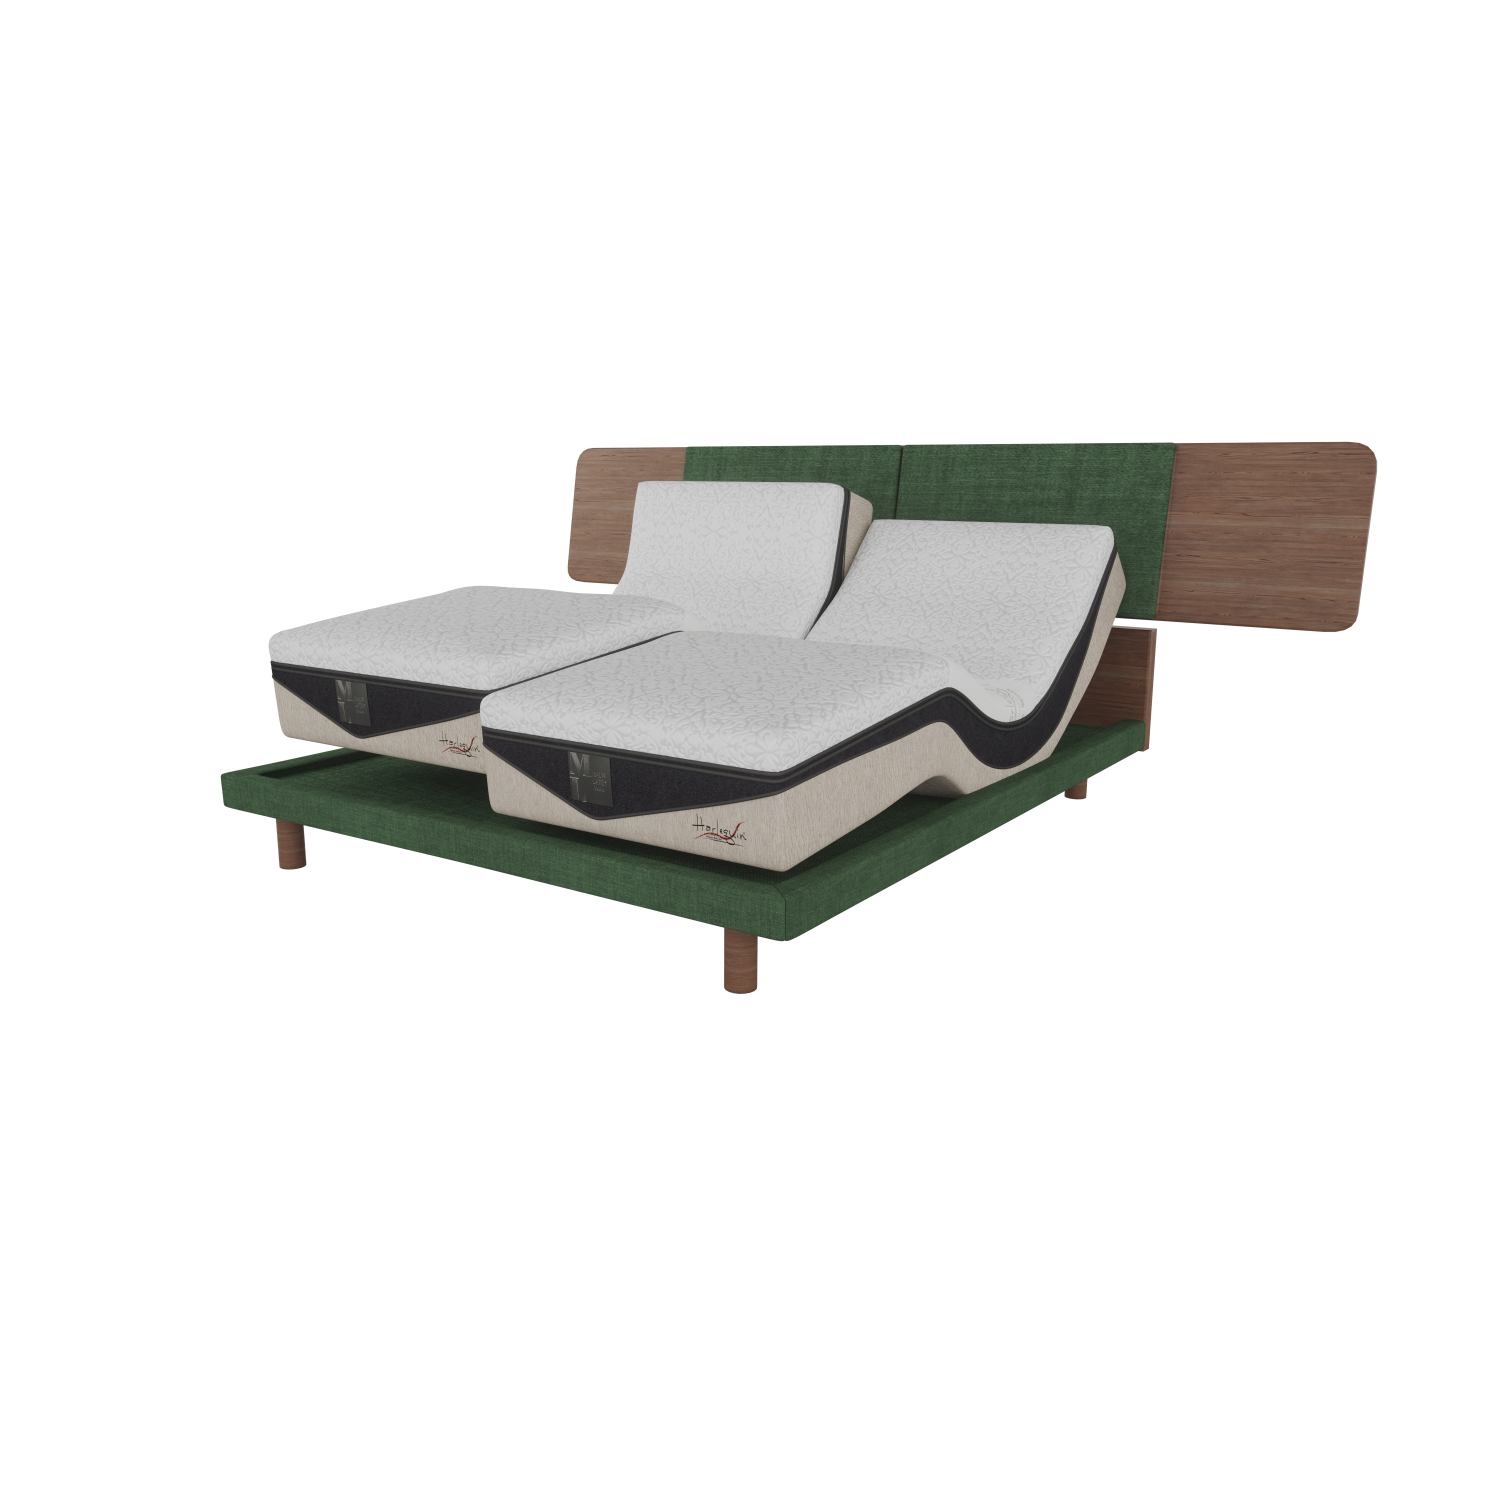 Malia Adjustable Bed Angled View